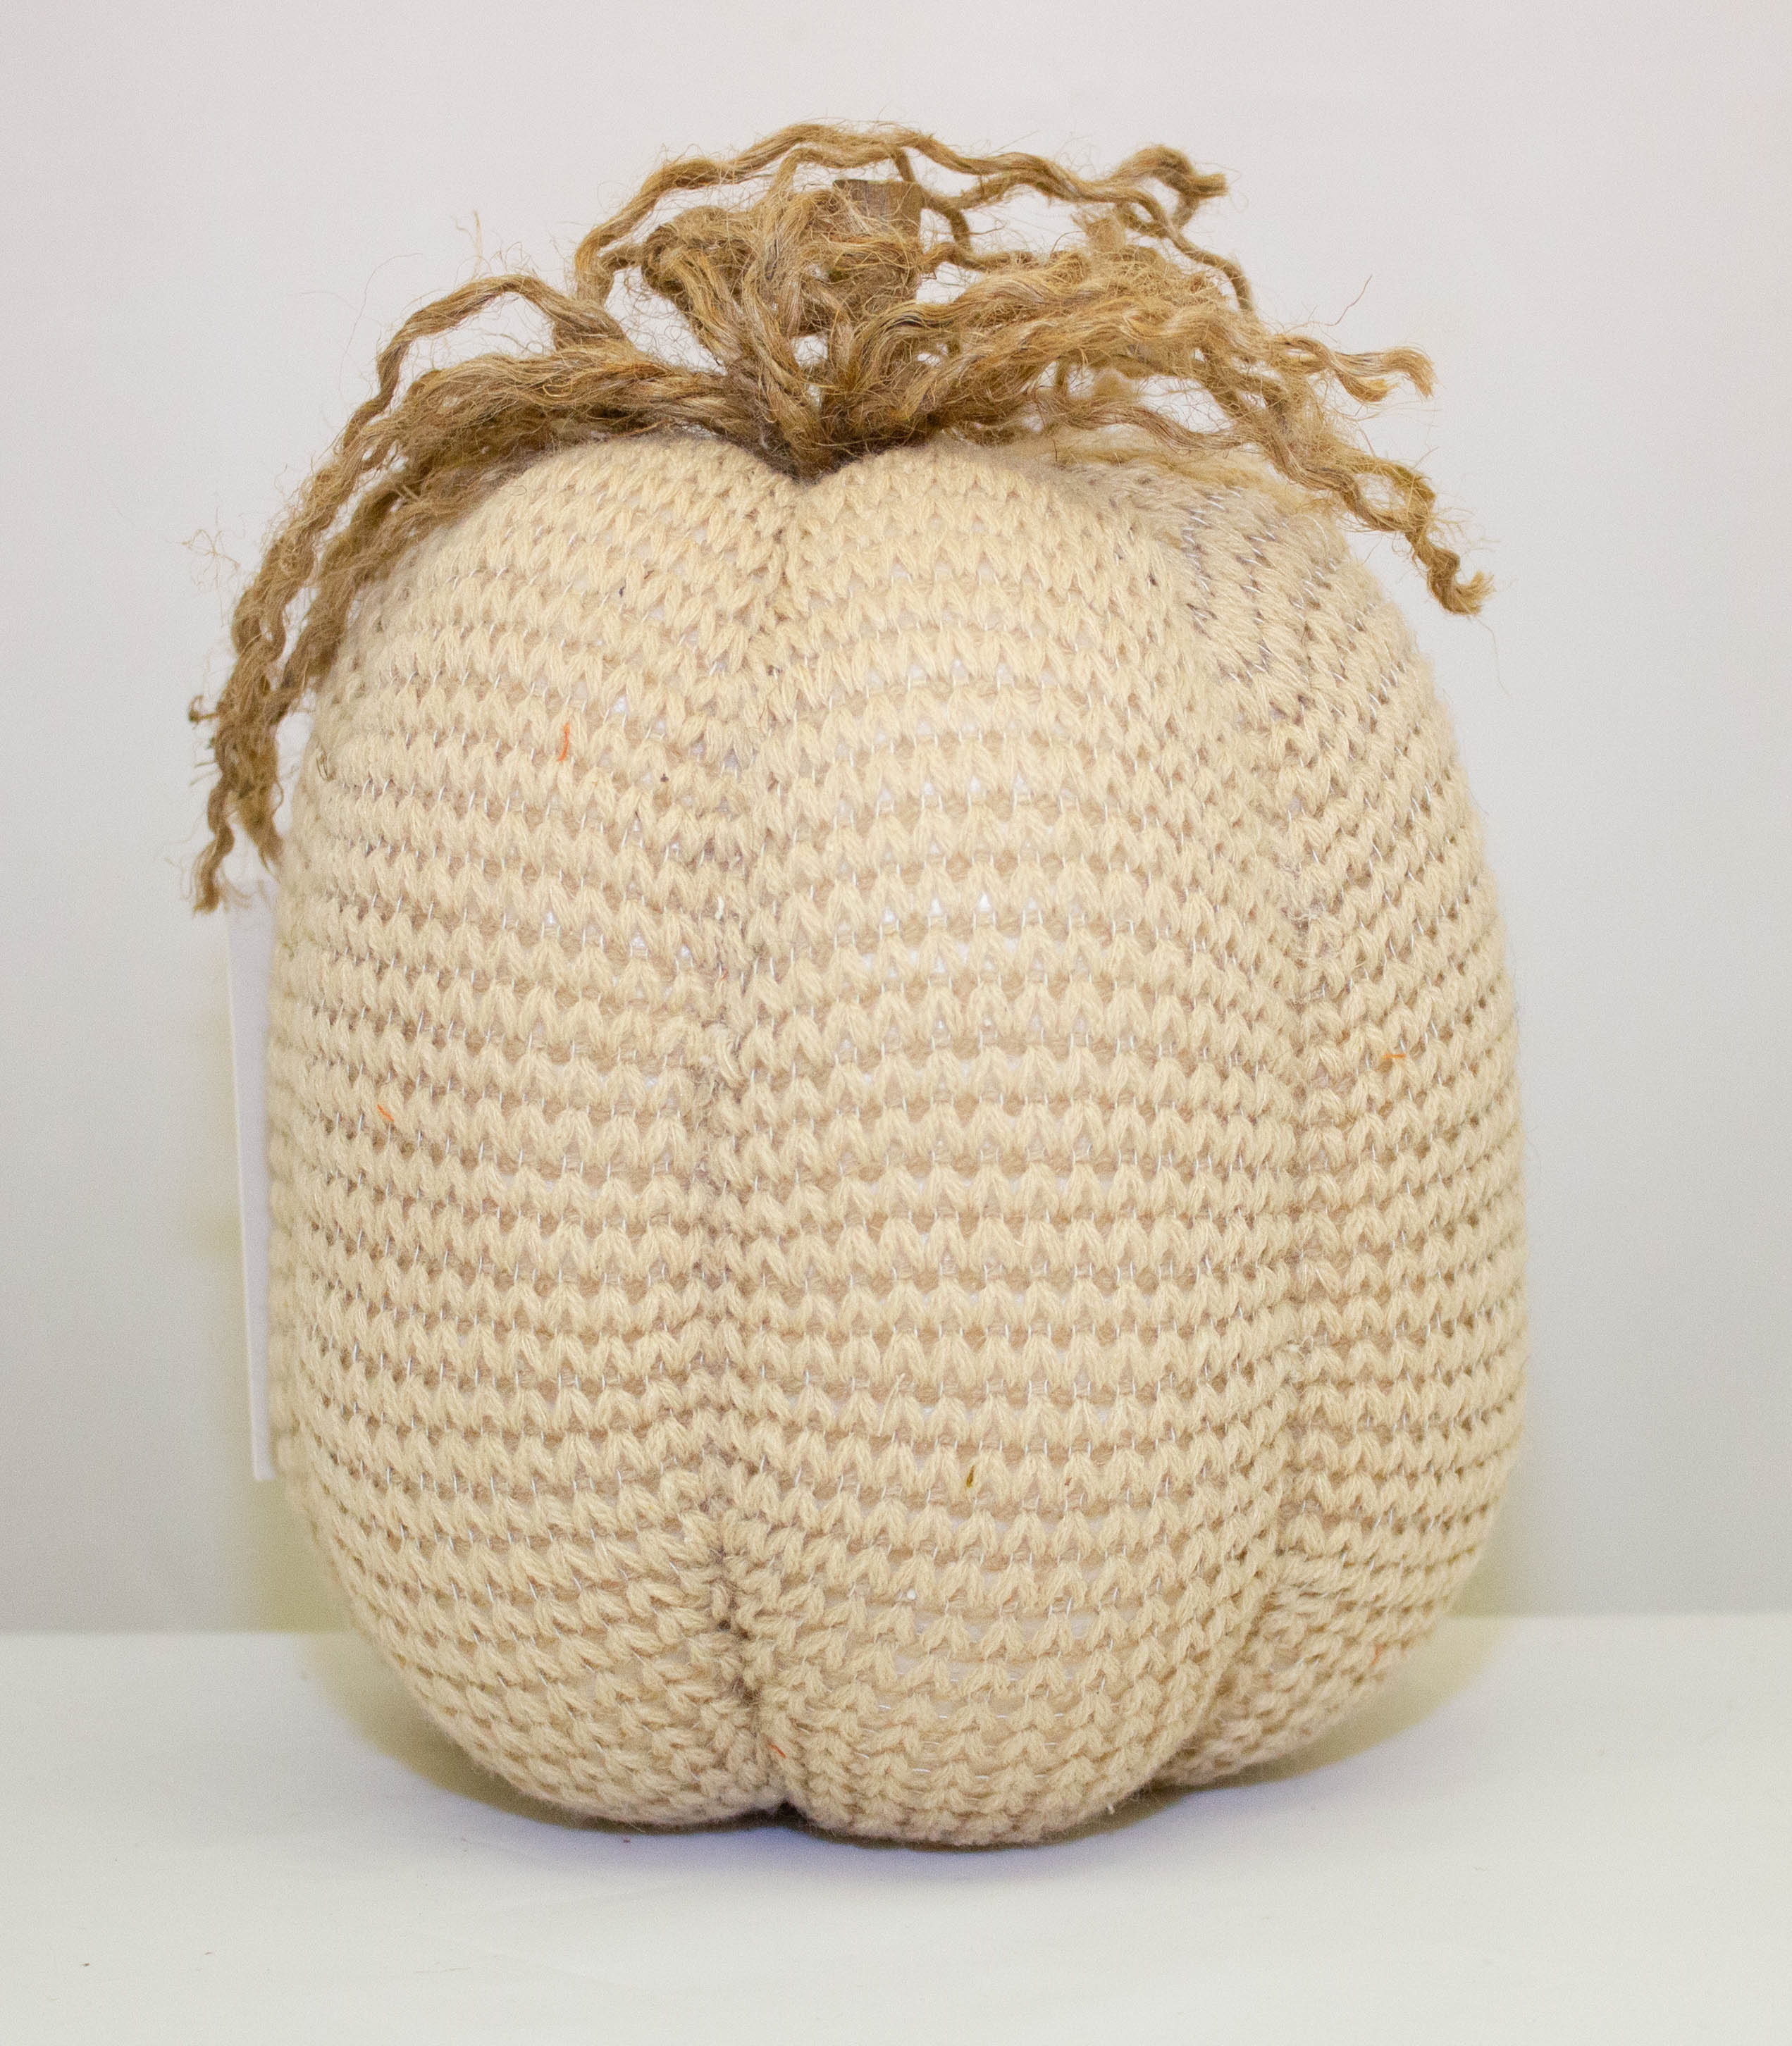 Rustic knitted tall cream pumpkin